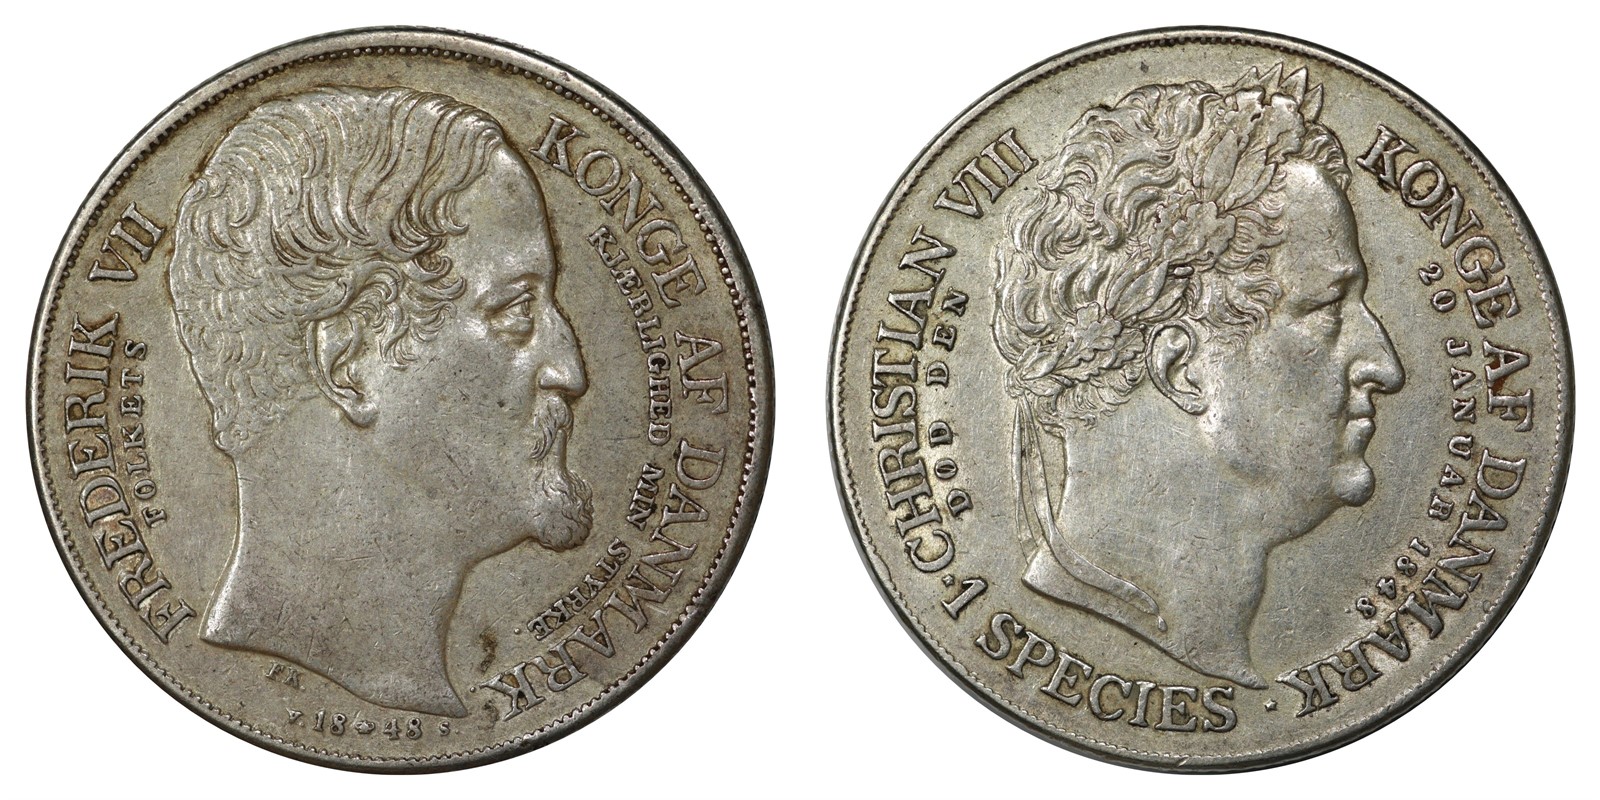 Denmark - Frederik VII - 1 Speciedaler 1848 - Succesion of throne - VF *